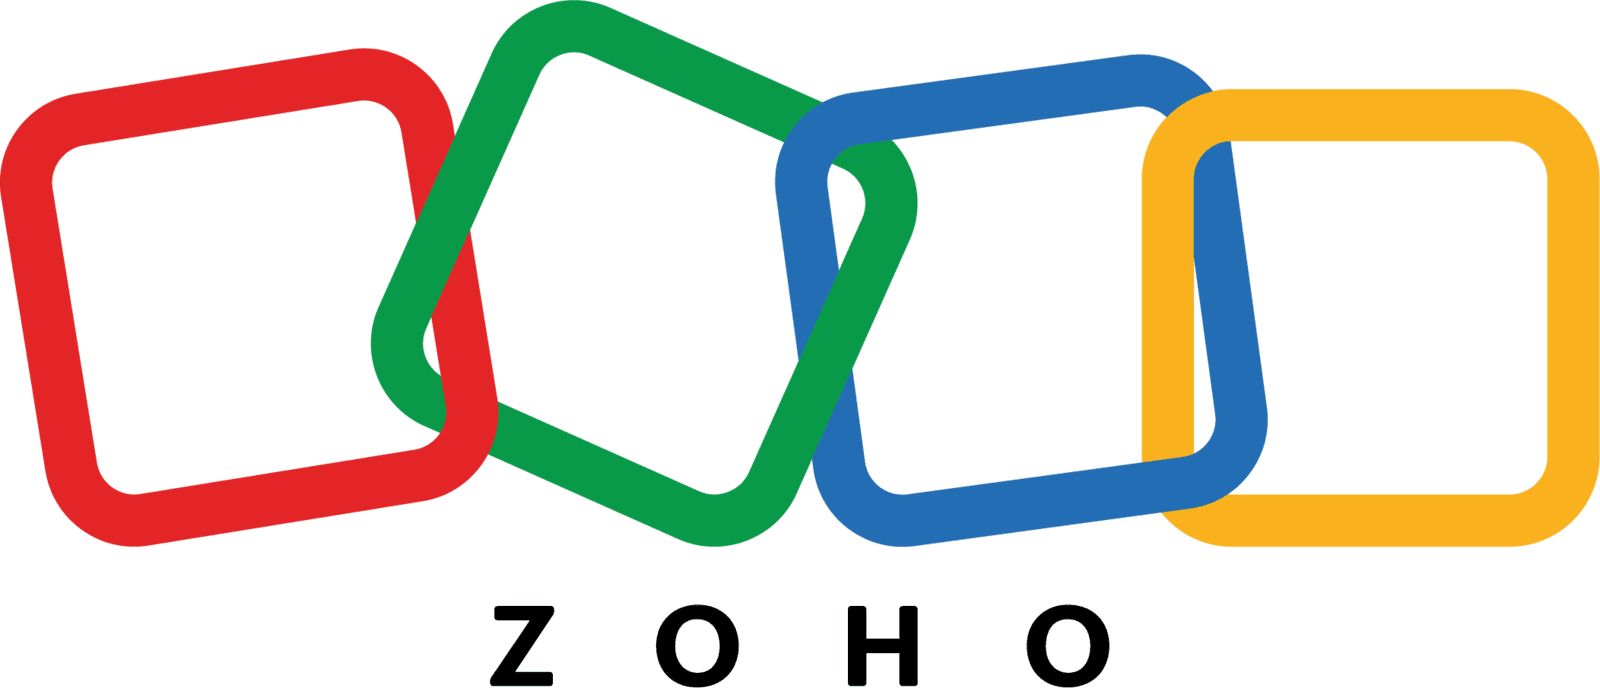 Infolytics | Zoho | Zoho Partner South Africa